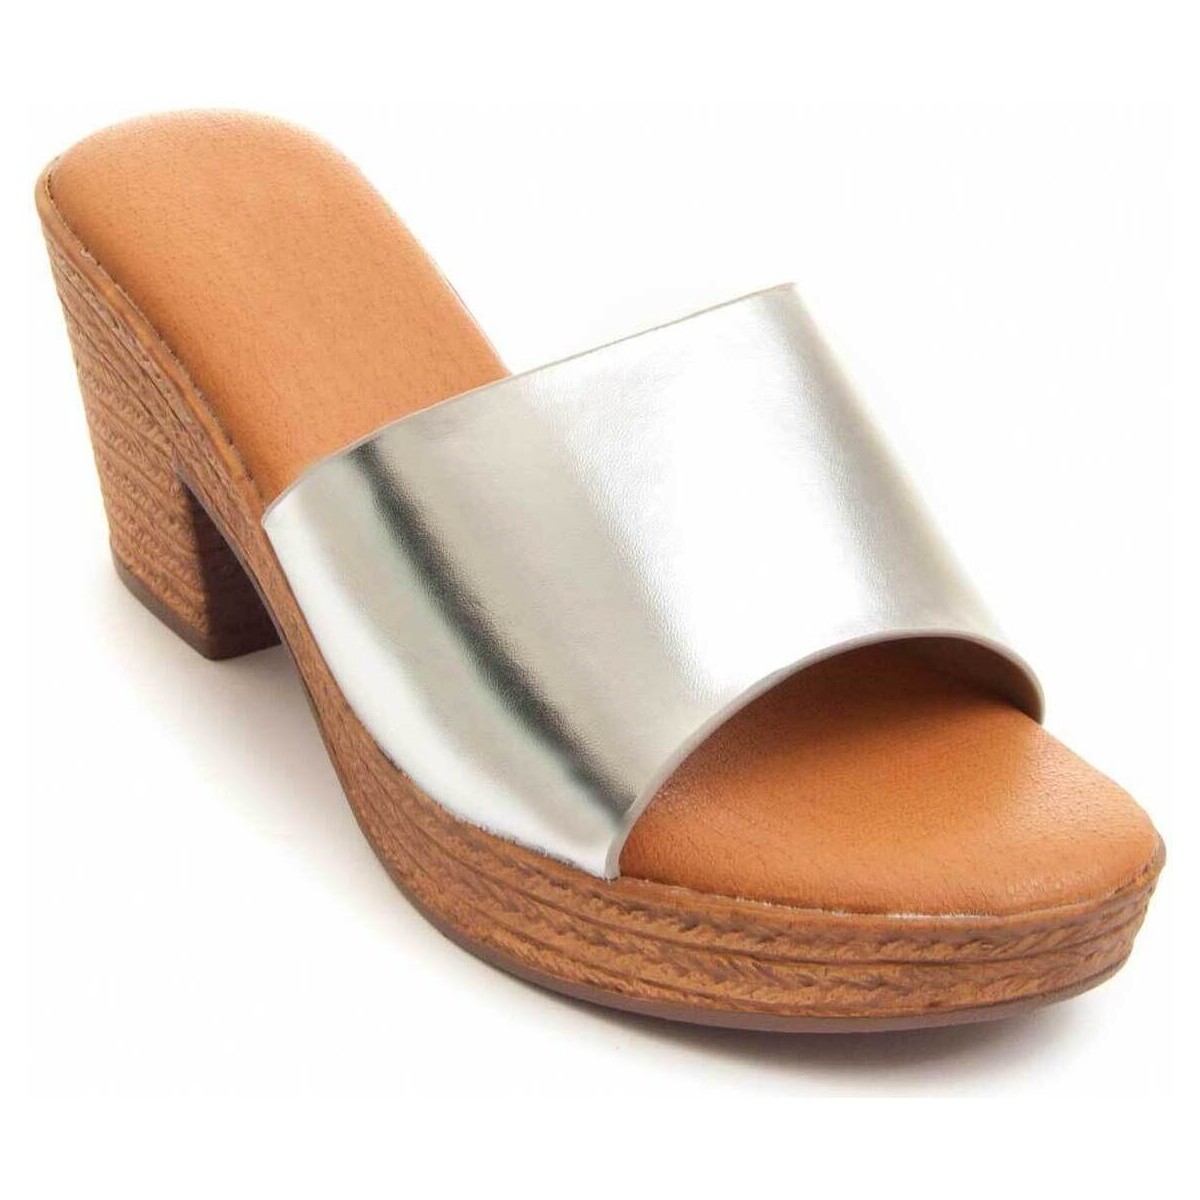 Pantofi Femei Sandale Bozoom 83262 Argintiu